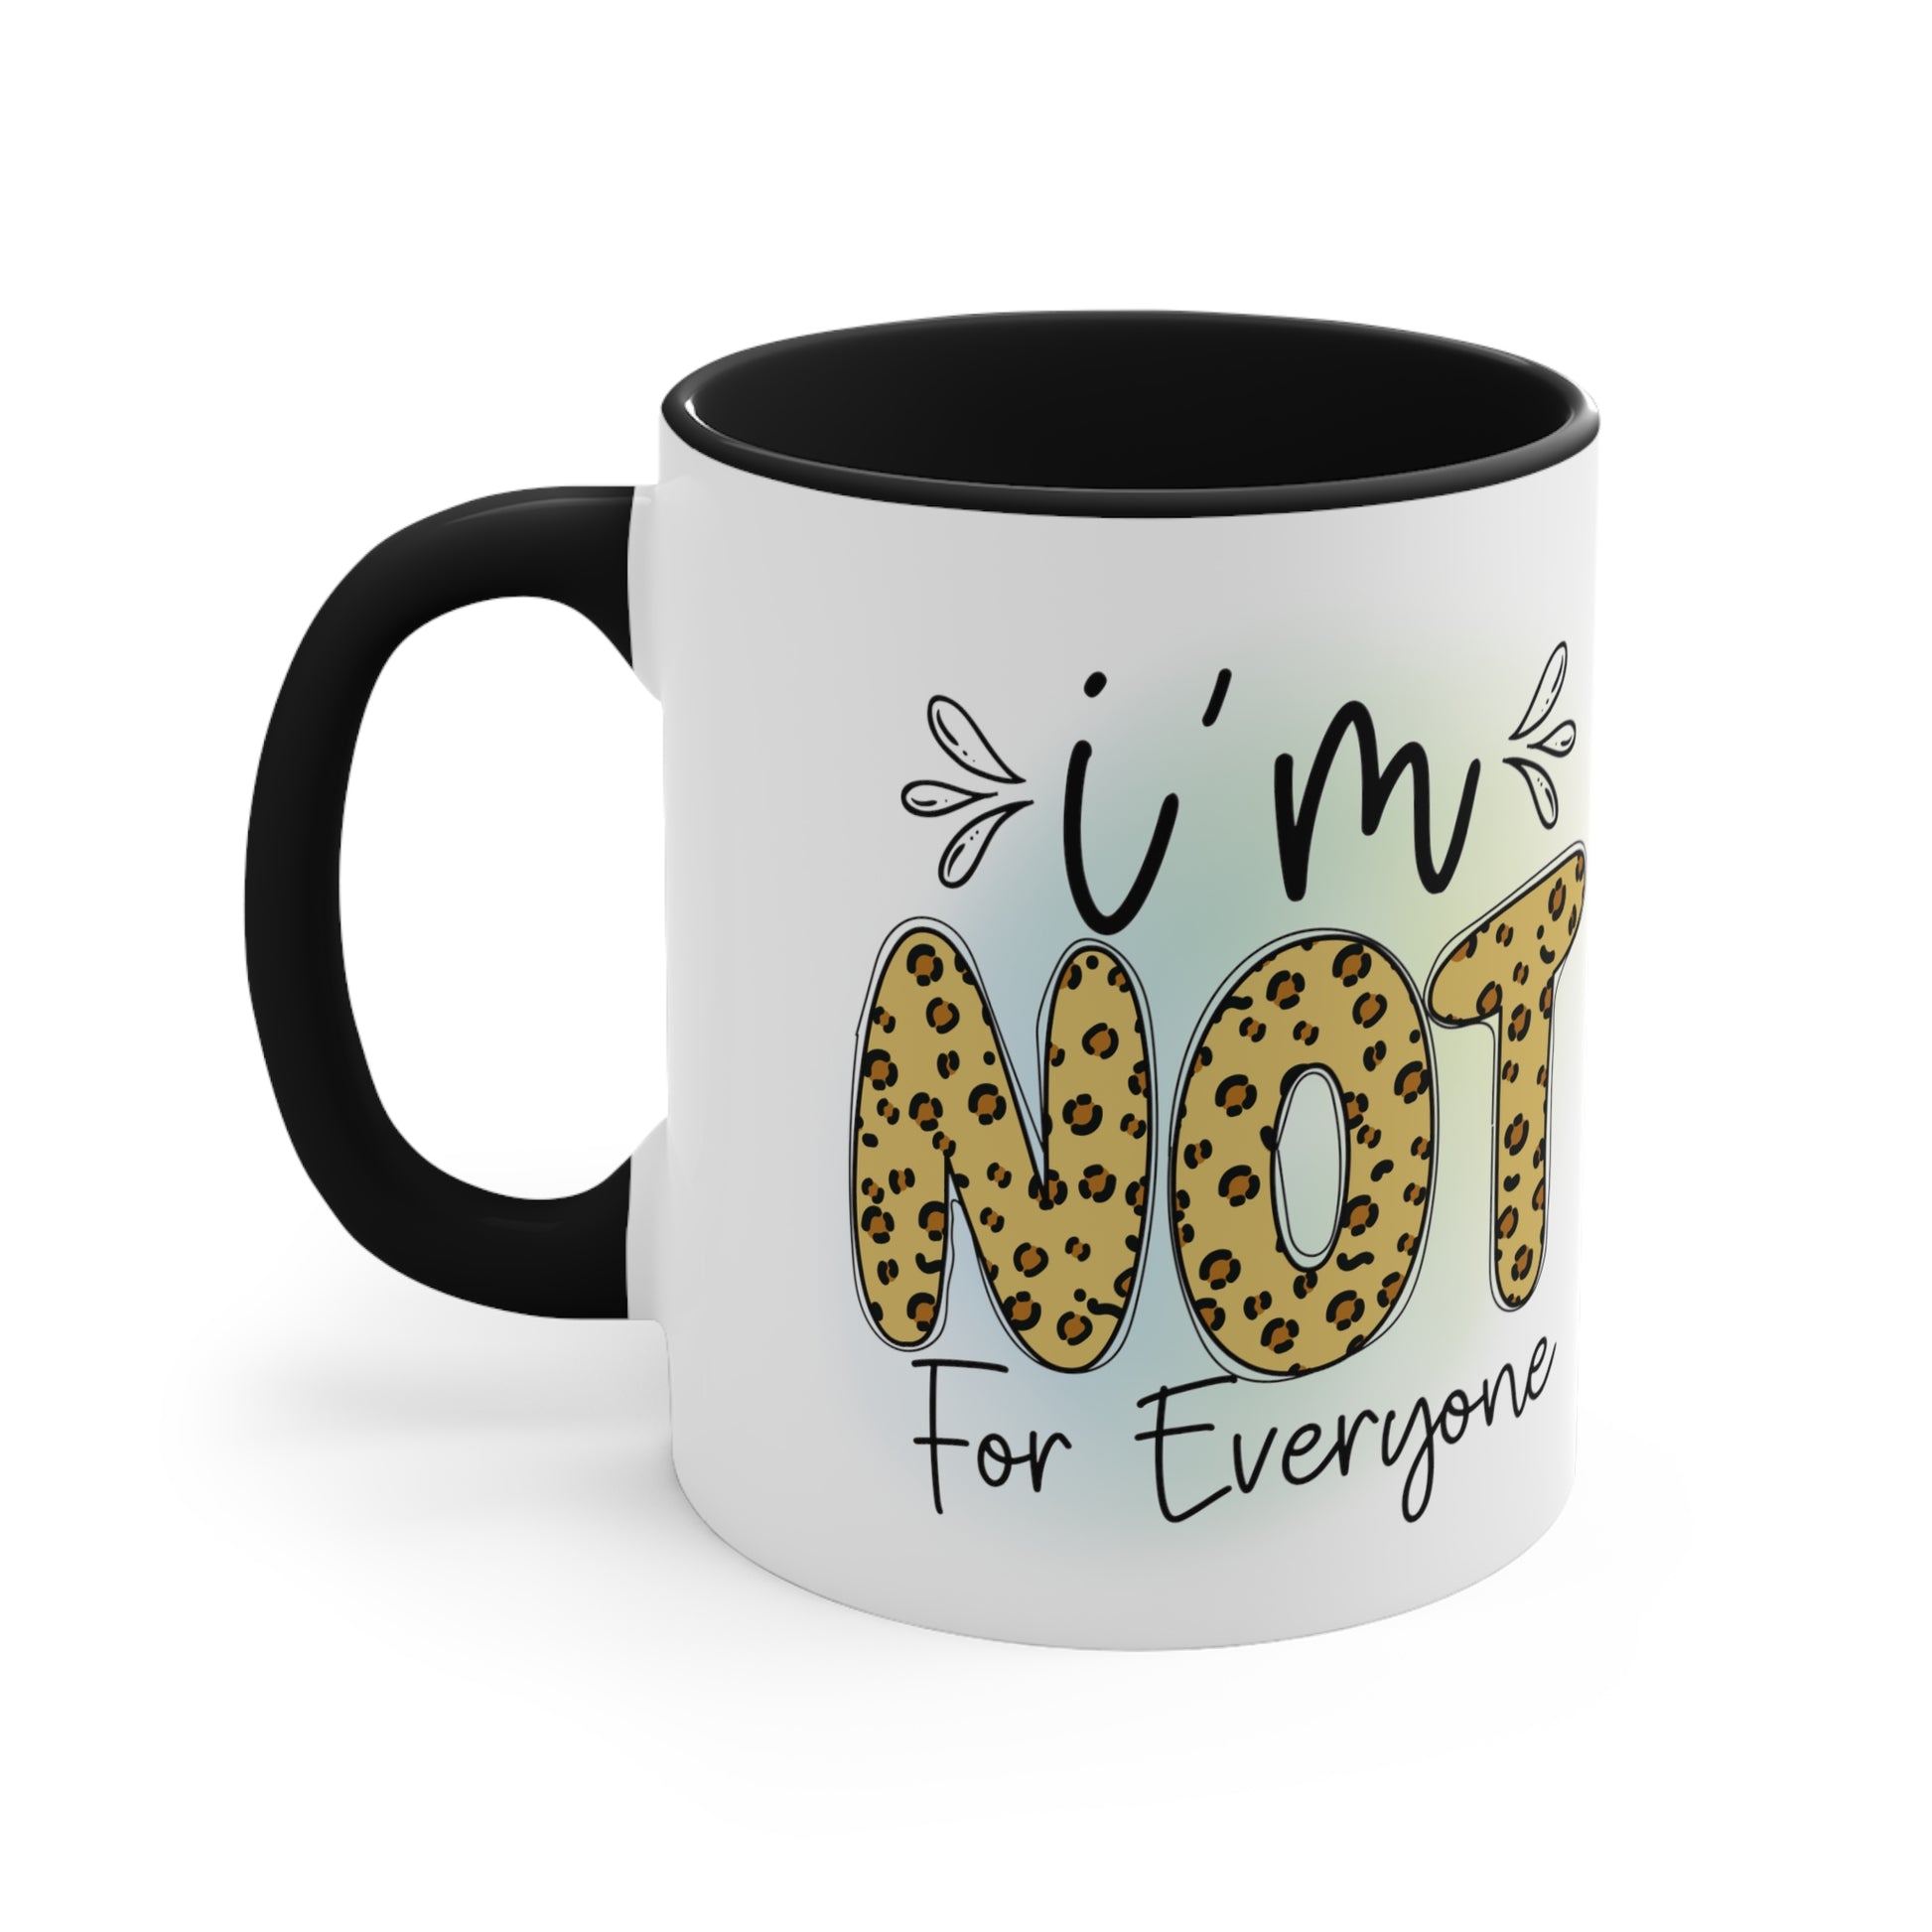 Self-love journey tonic tea mug designed by Shamara Daniels